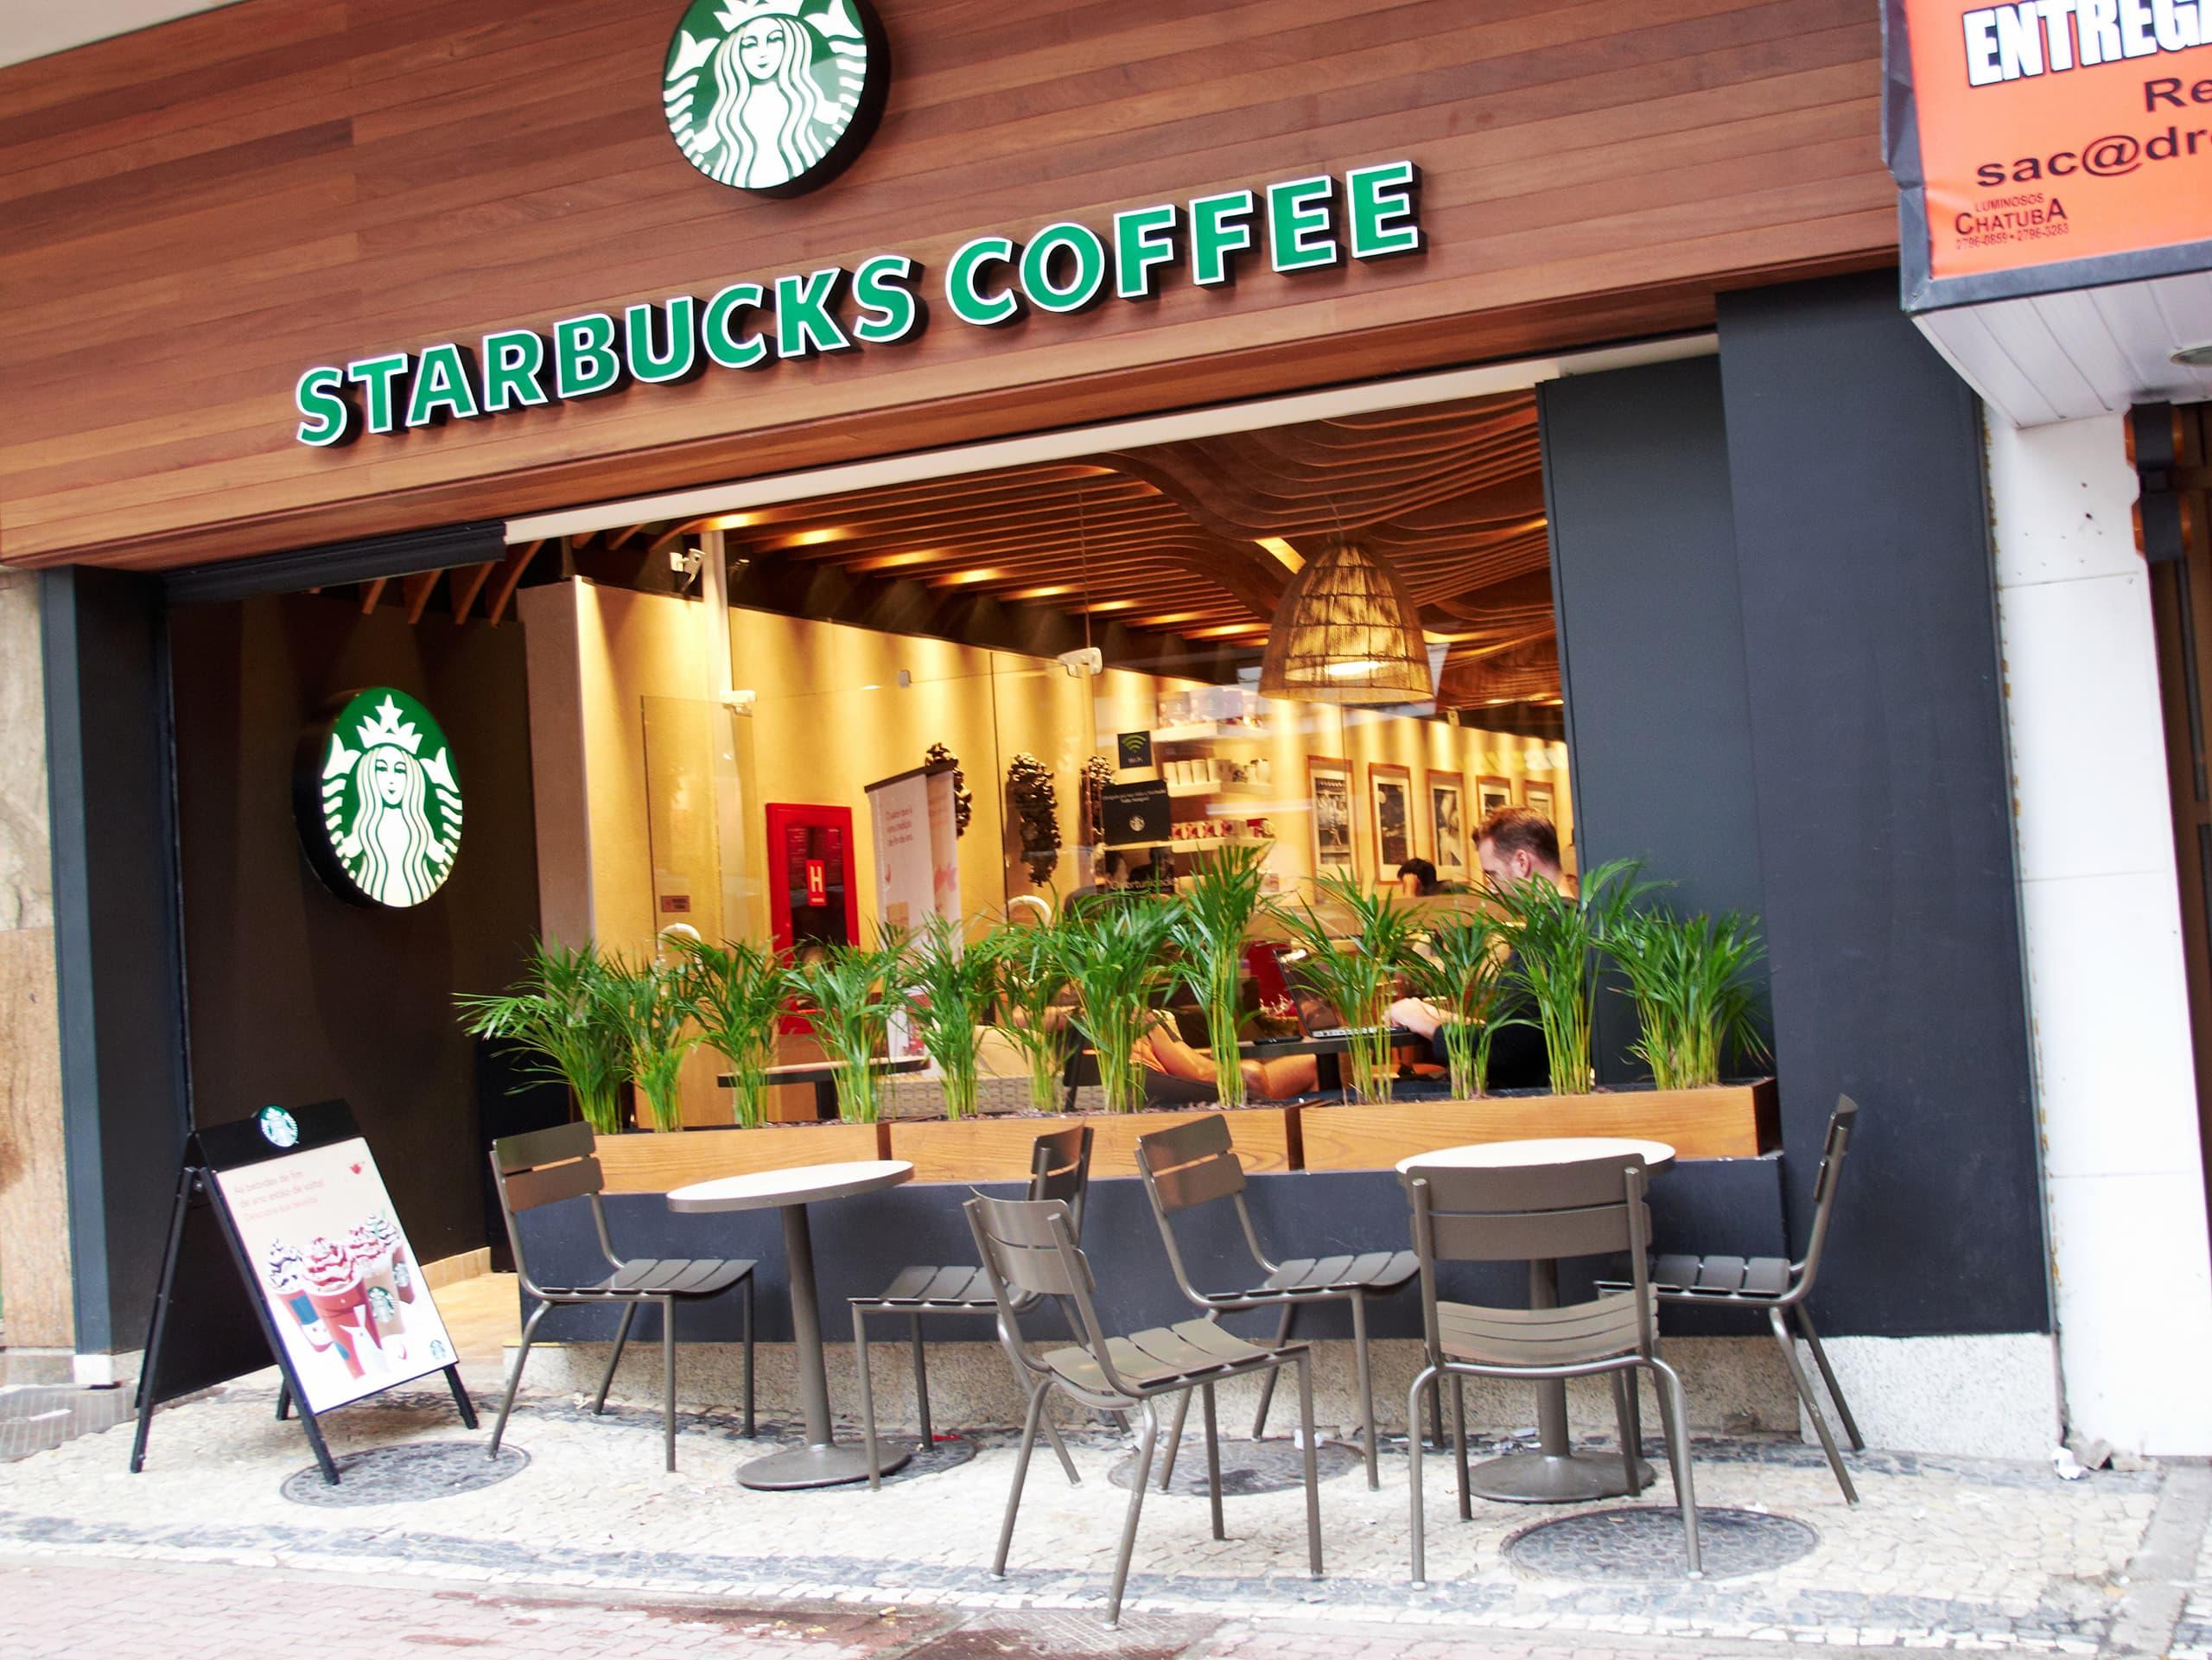 Starbucks Coffee Sign image gallery